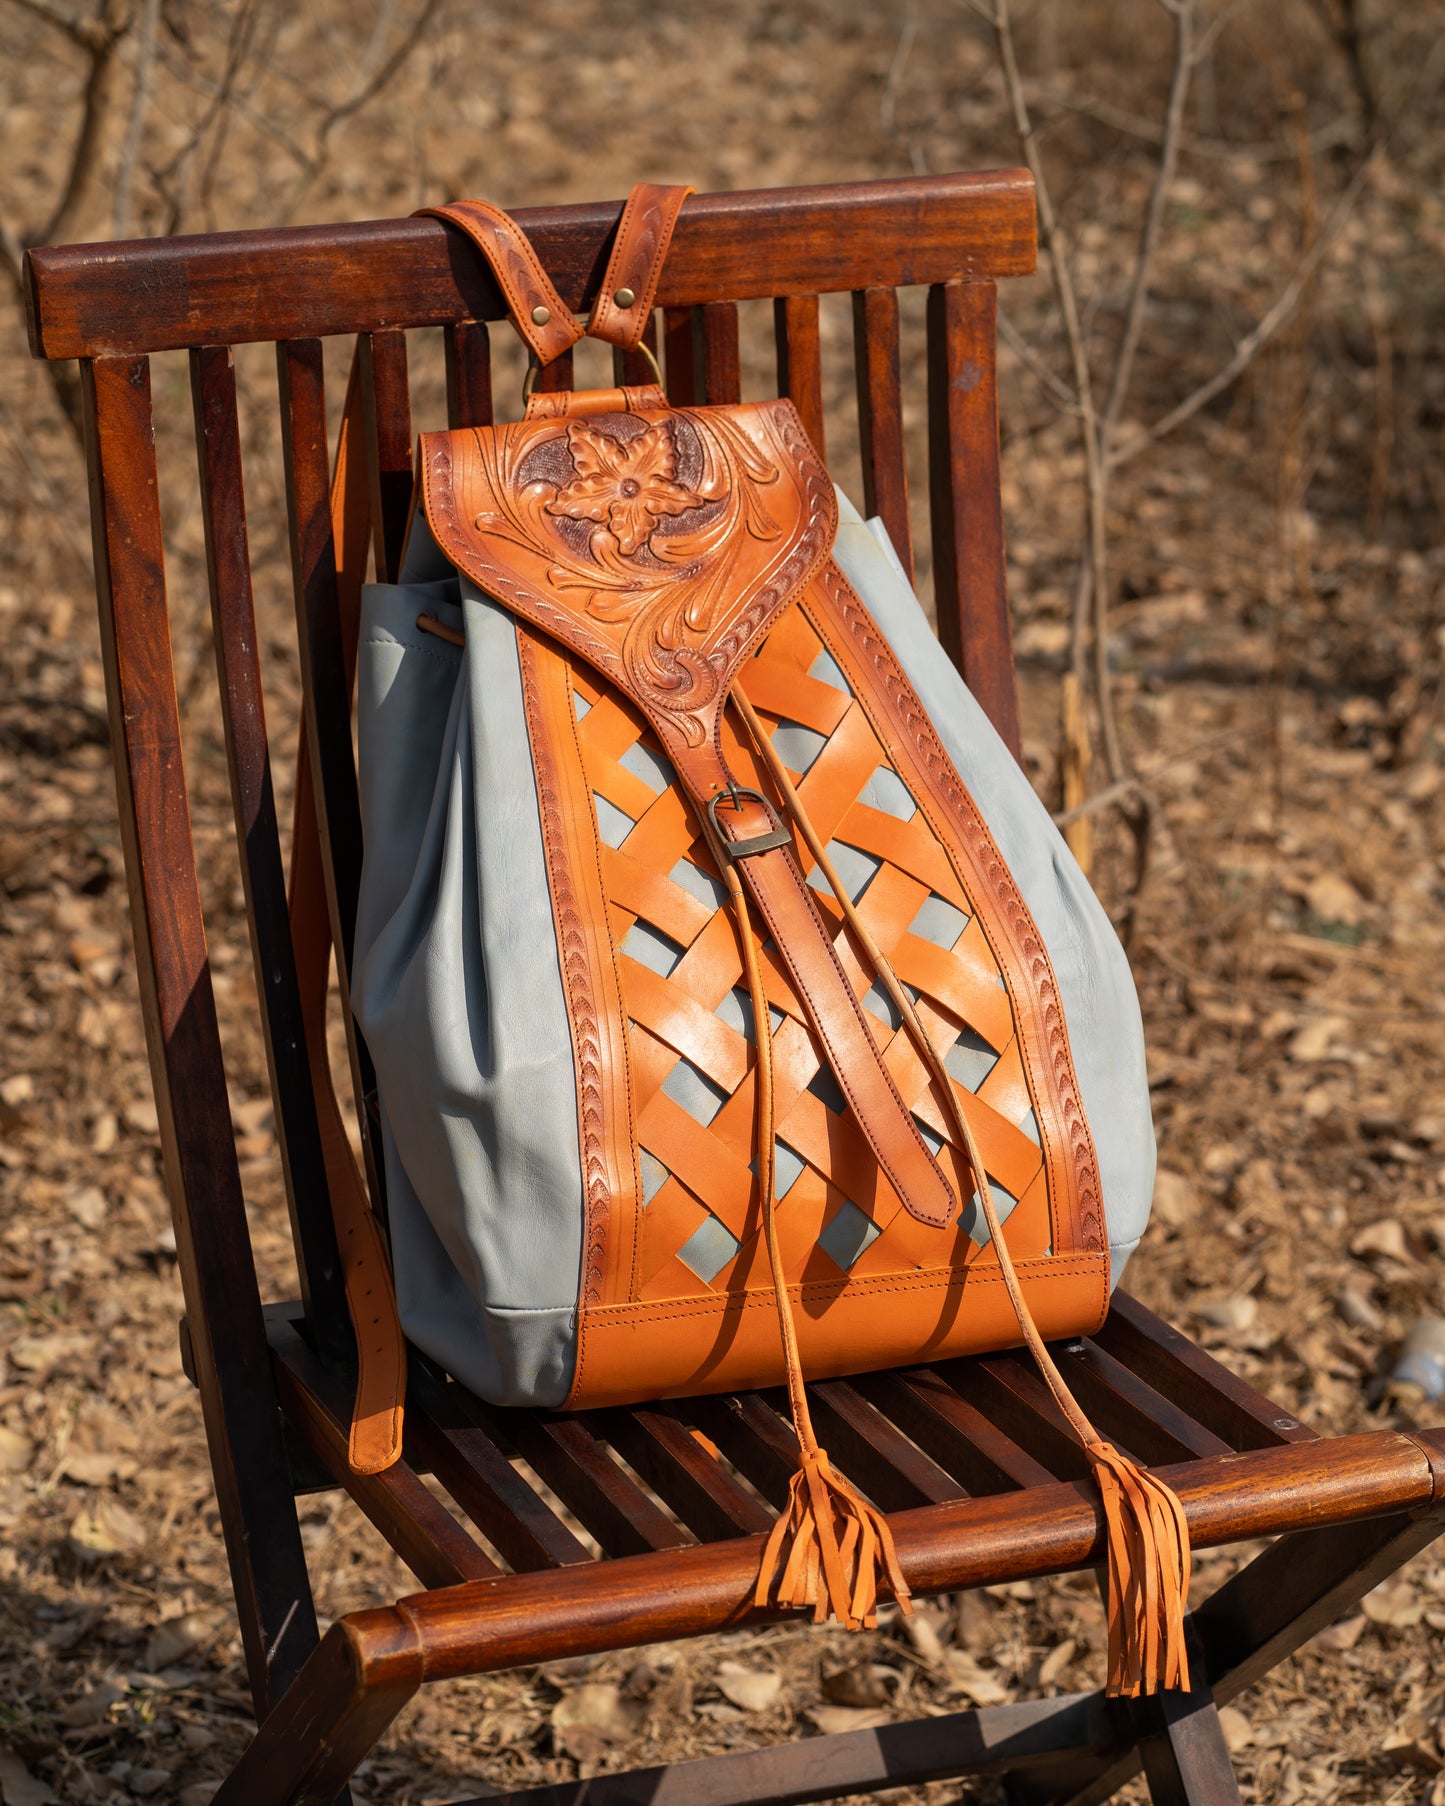 Vintage Unisex Tan Leather Tooled Backpack